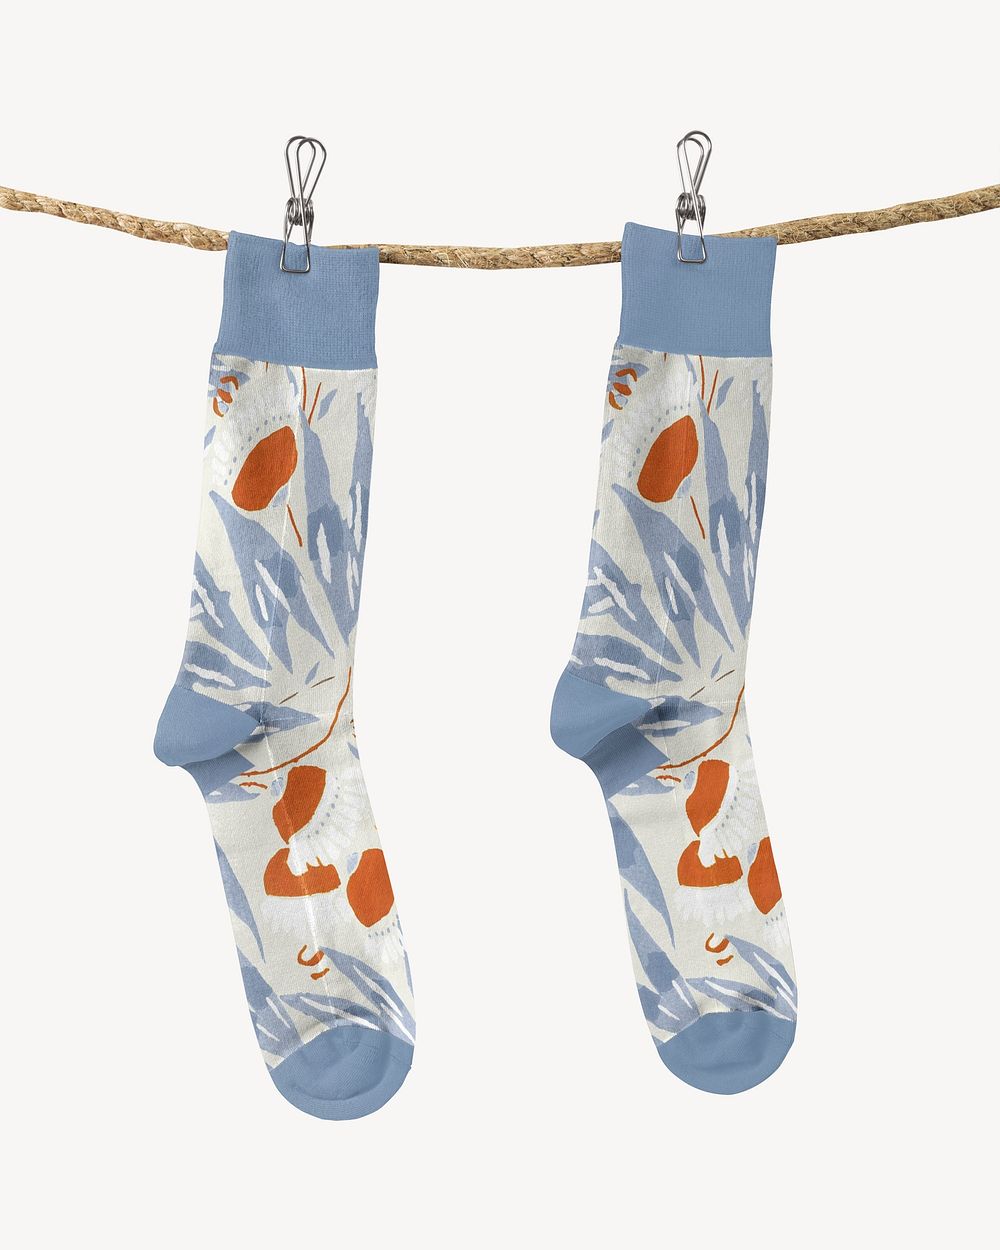 Hanging socks mockup, editable fashion psd